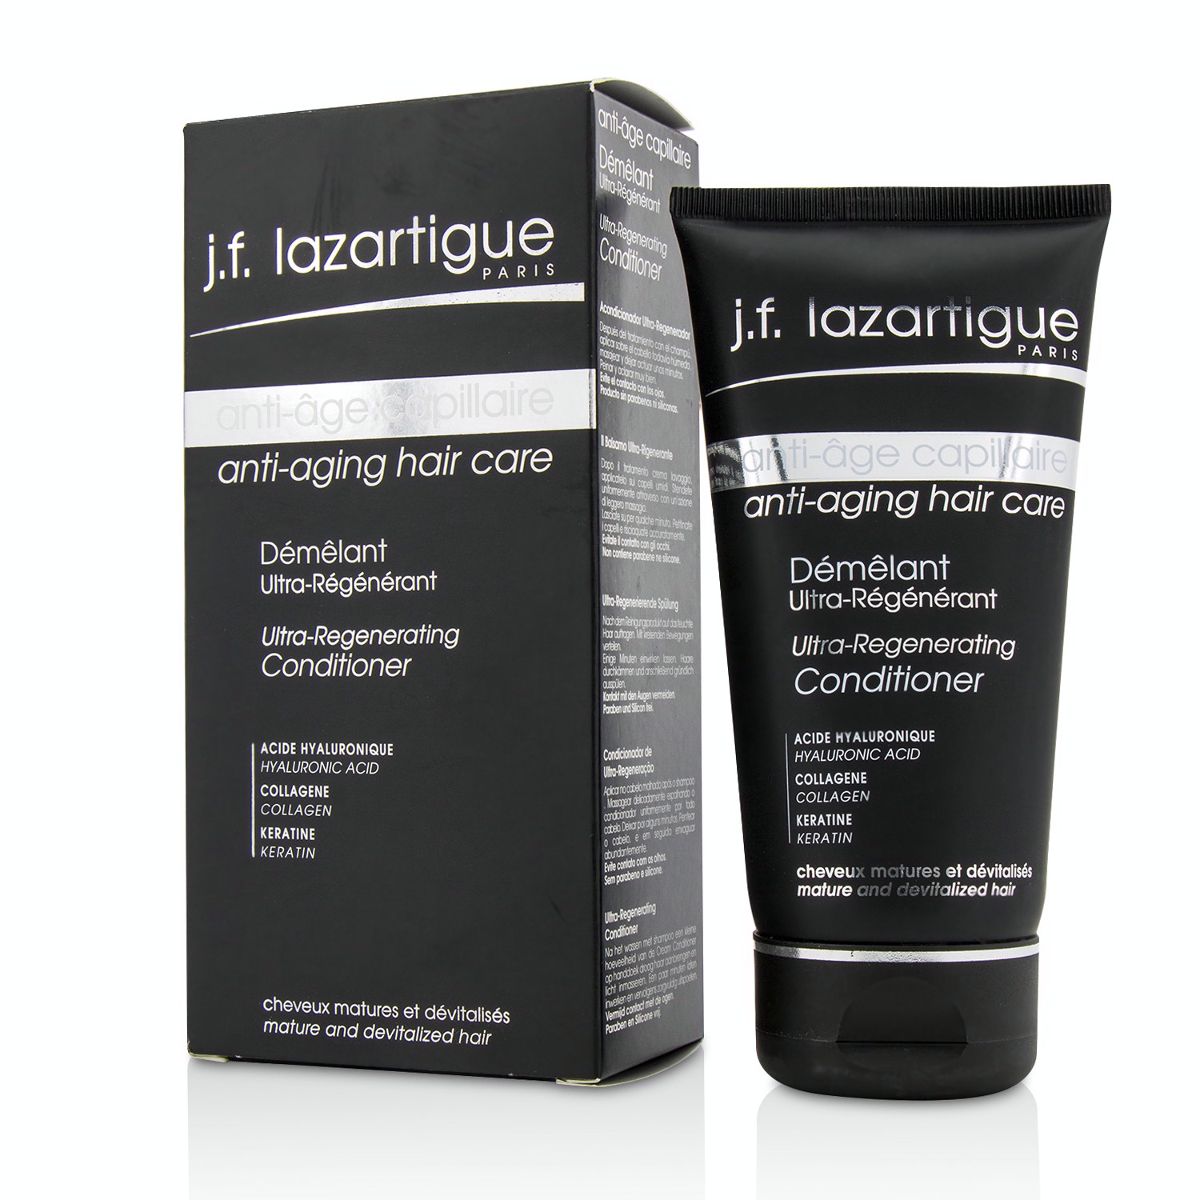 Anti-Aging Hair Care Ultra-Regenerating Conditioner J. F. Lazartigue Image